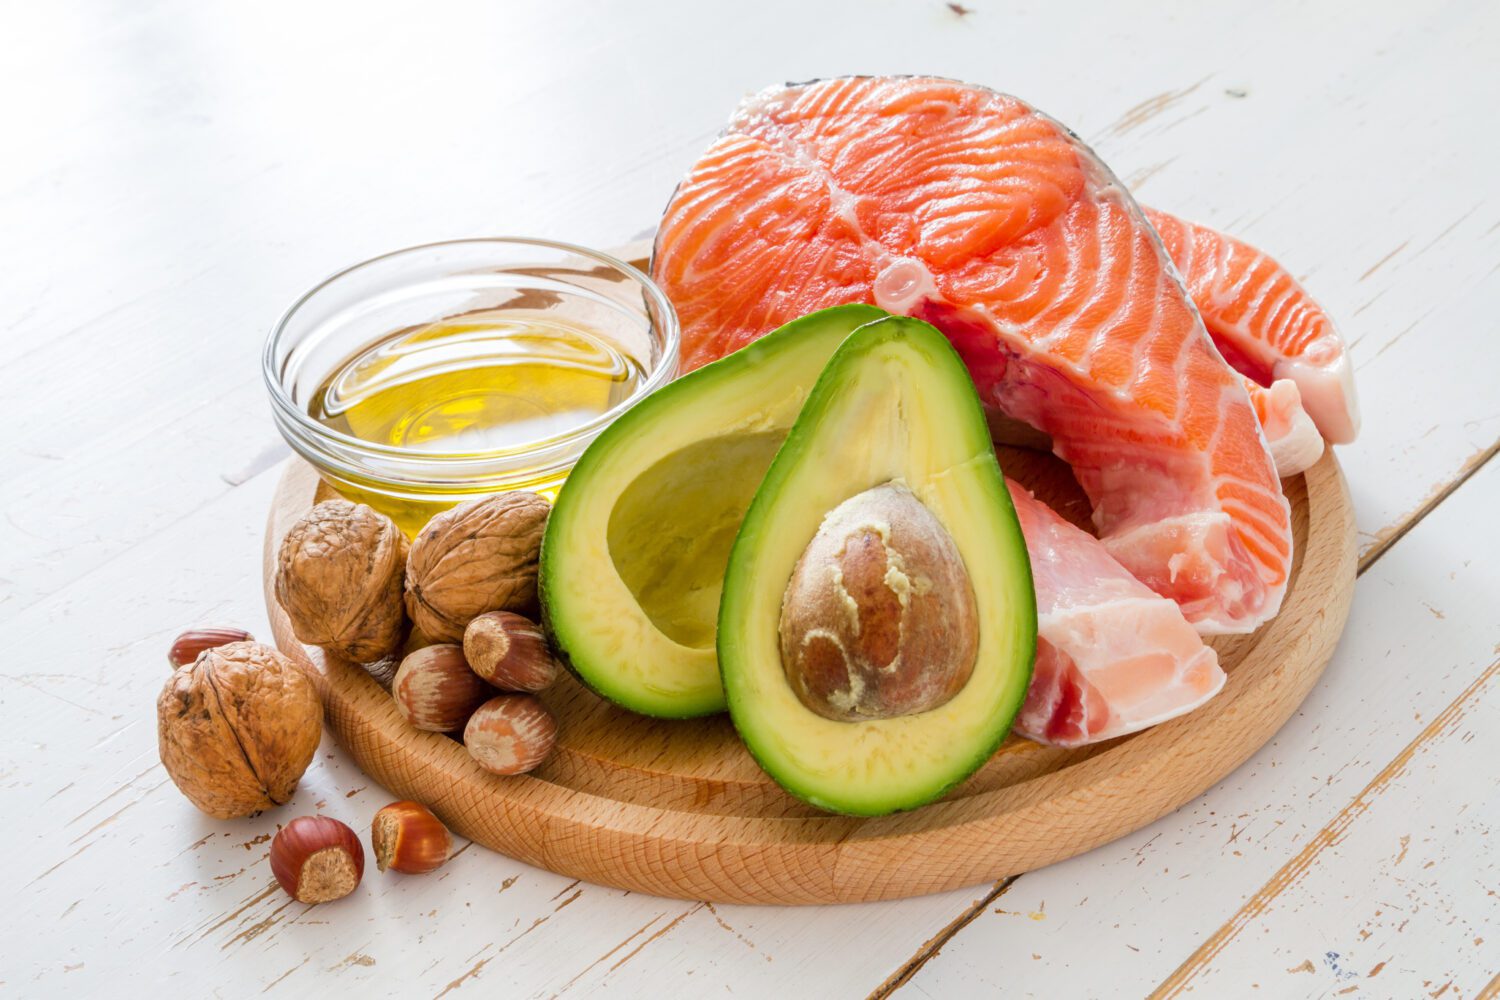 Healthy fats - avocado, salmon and nuts